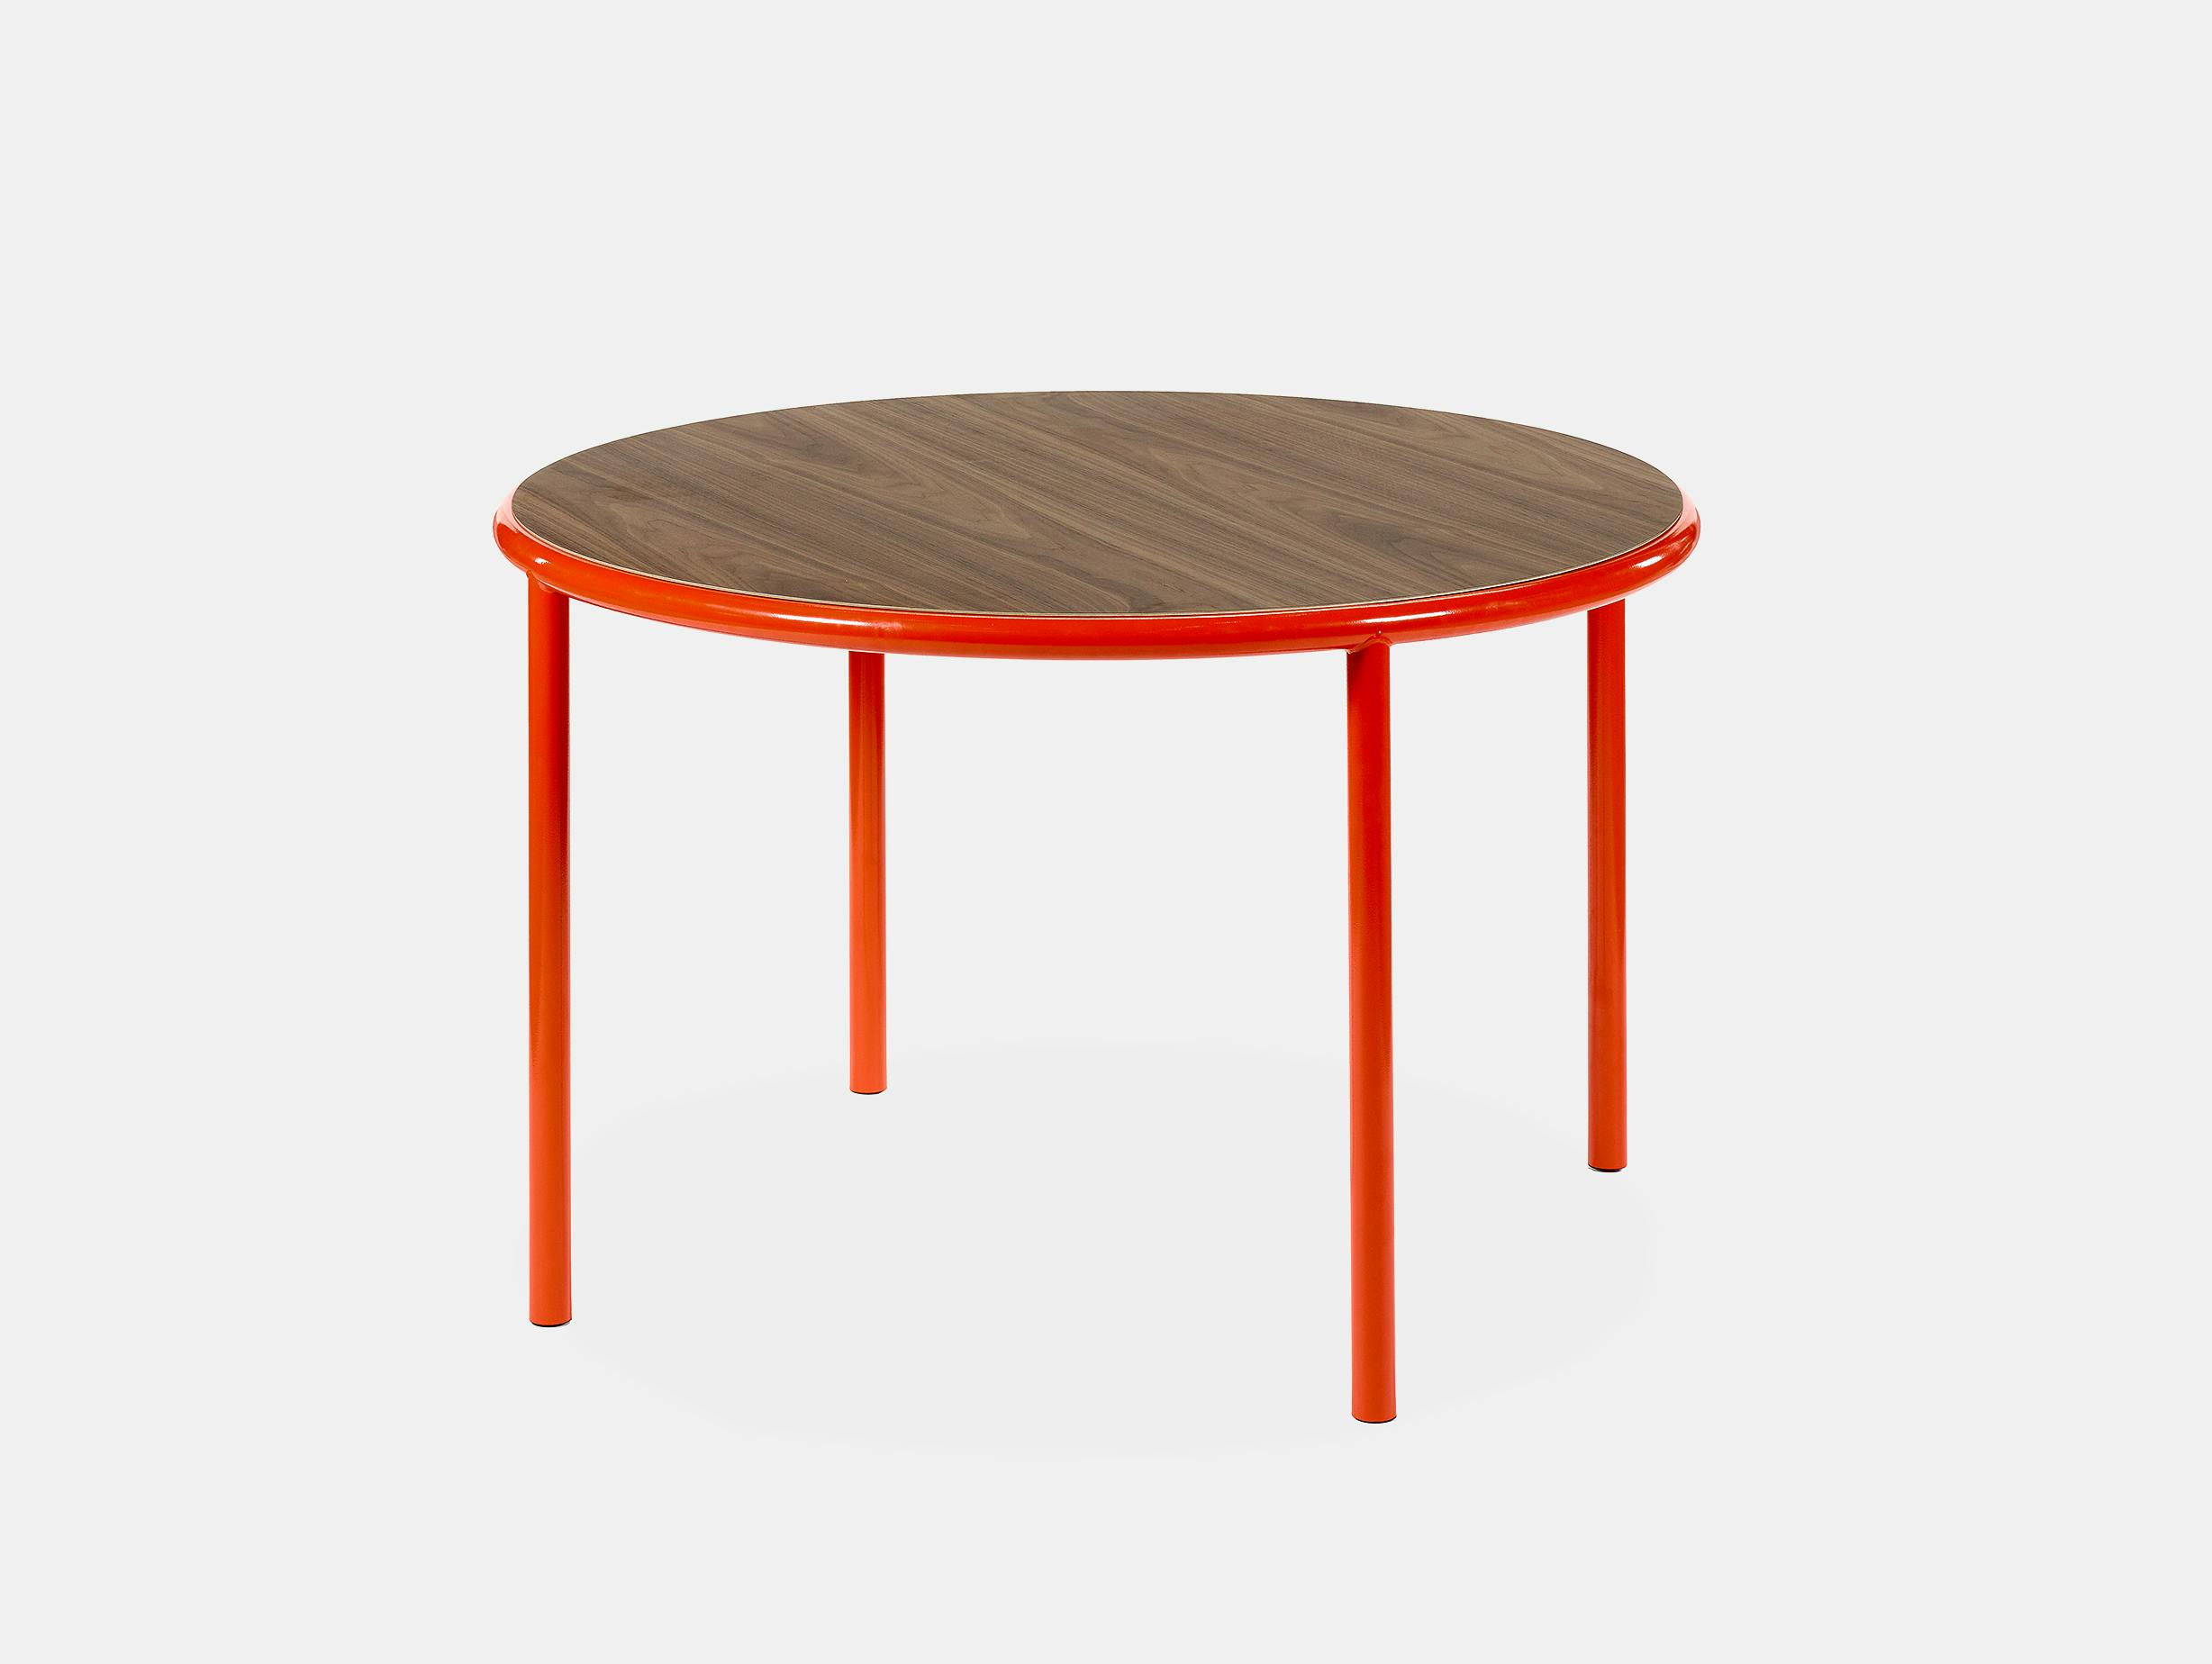 Muller van severen wooden table small round red walnut